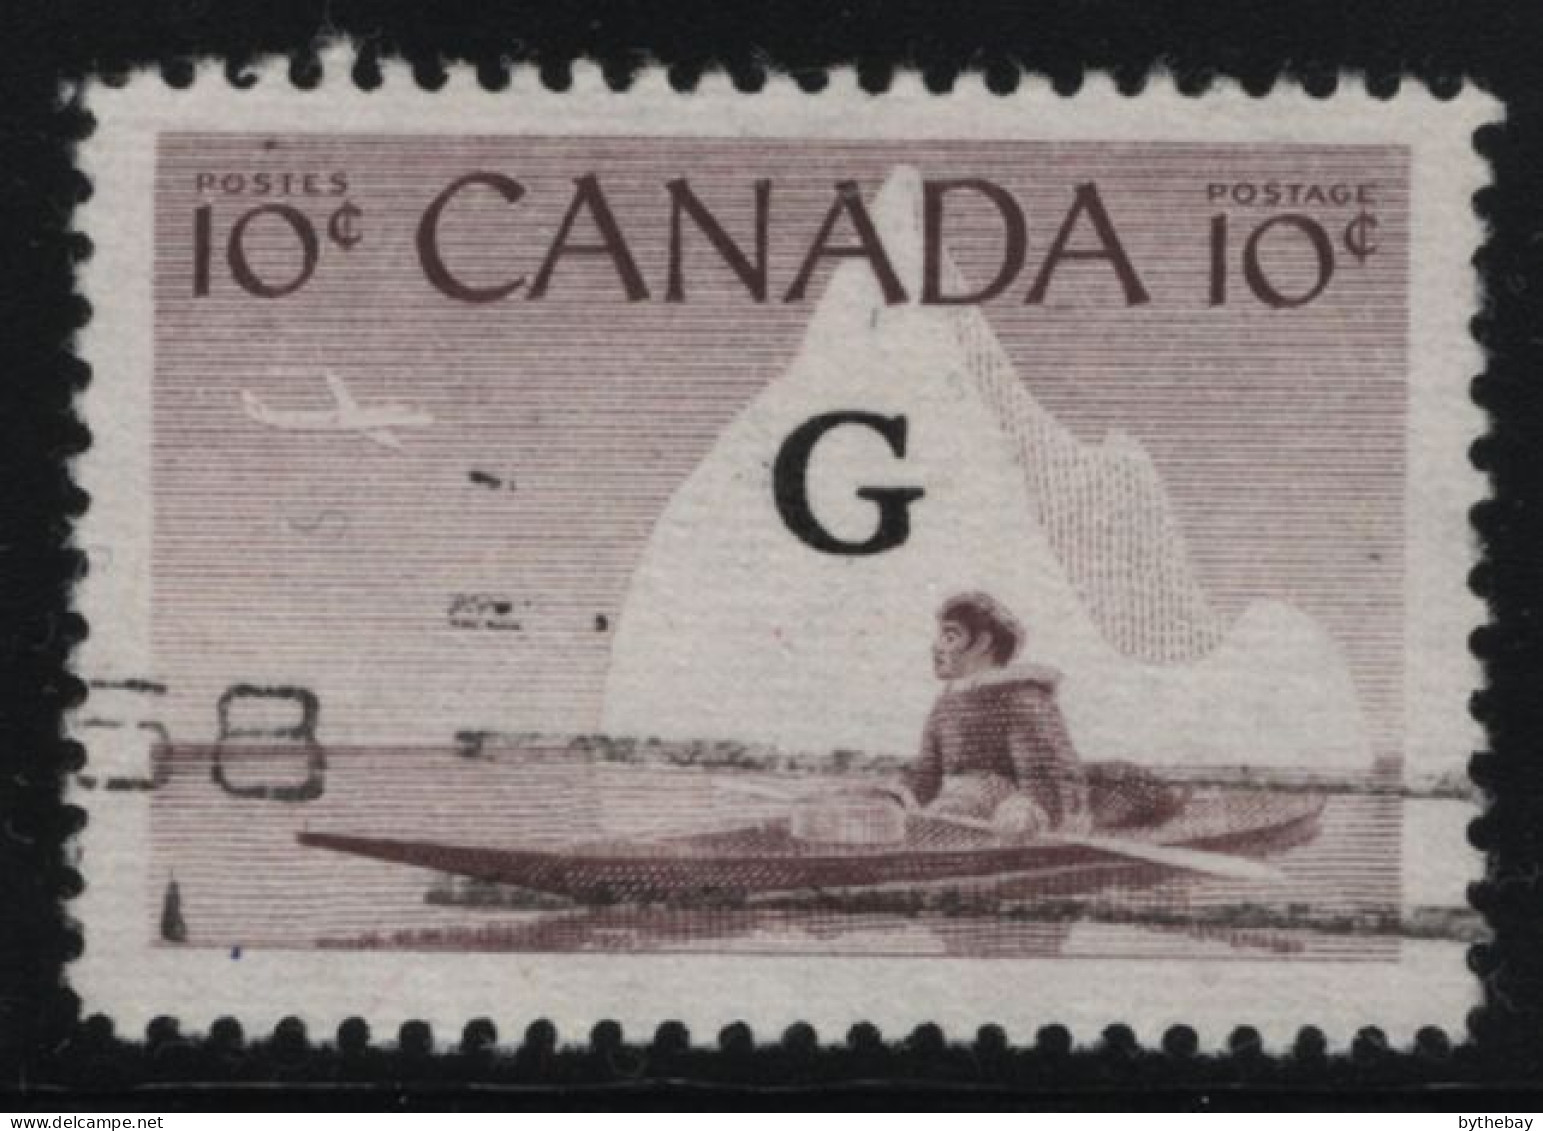 Canada 1953-55 Used Sc O39 10c Inuk, Kayak G Overprint - Sobrecargados